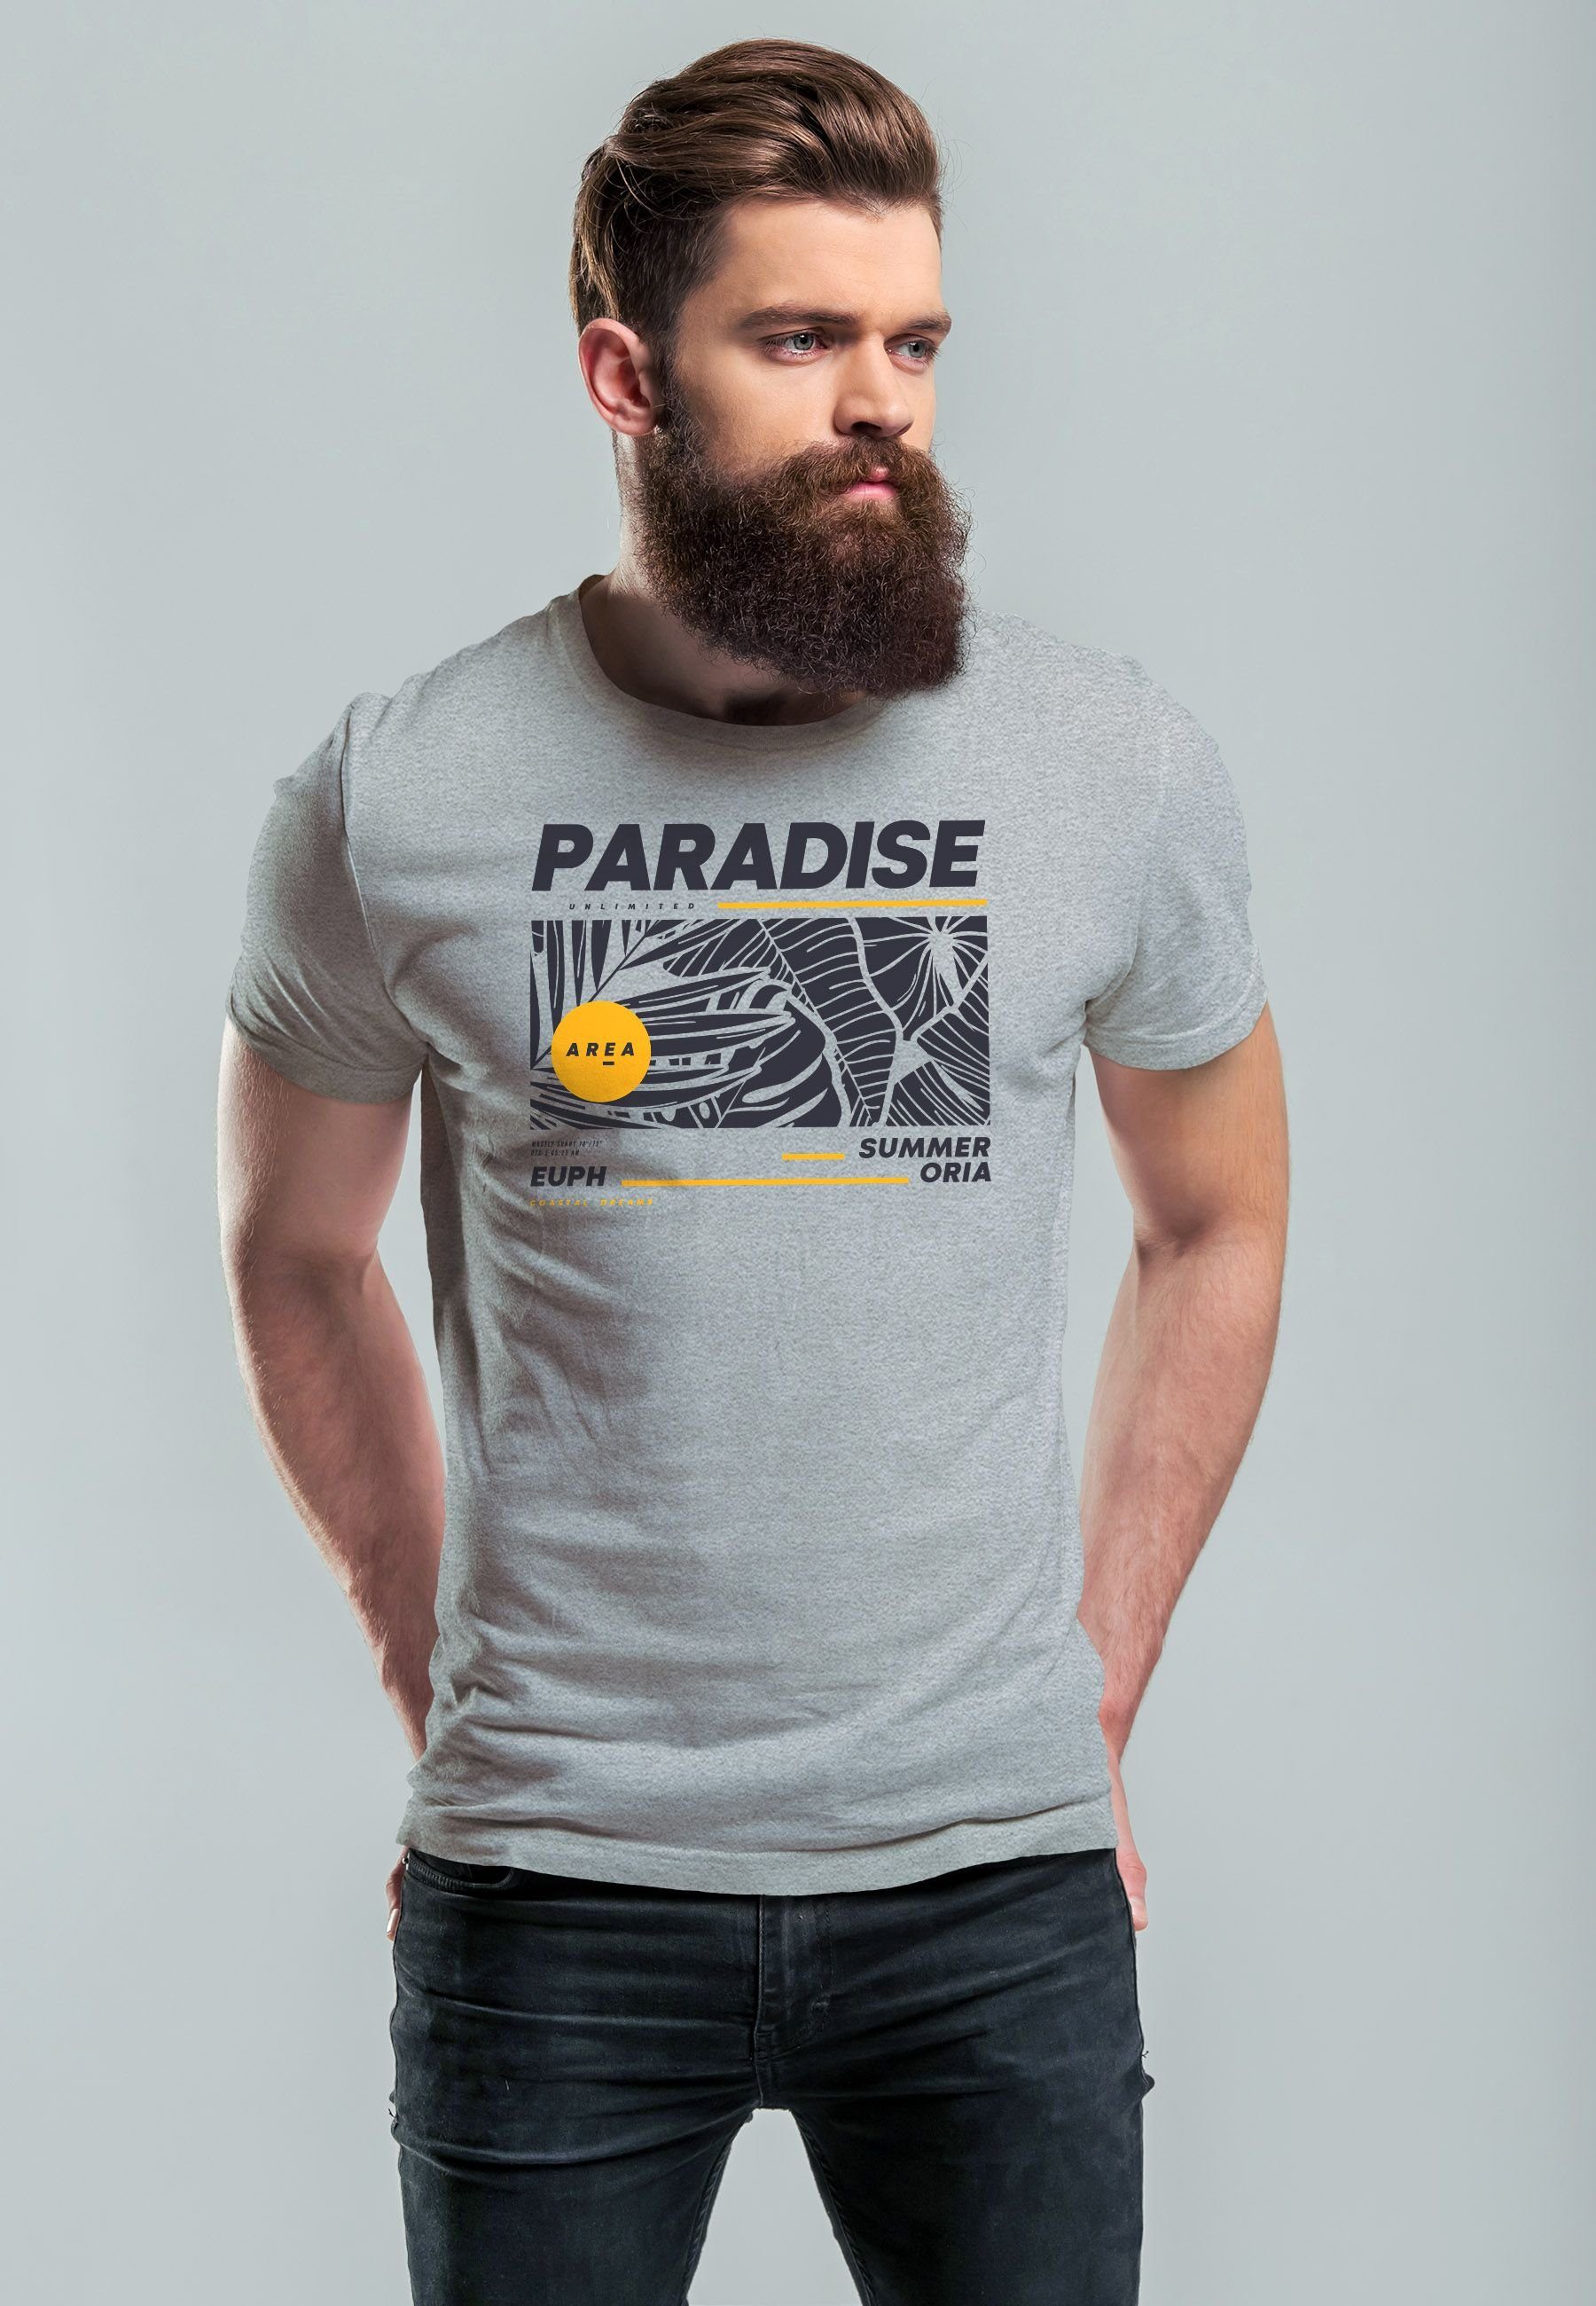 Herren Unlimited Neverless Motiv grau Teachwear Aufdruck T-Shirt mit Print Print-Shirt Fash Sommer Paradise